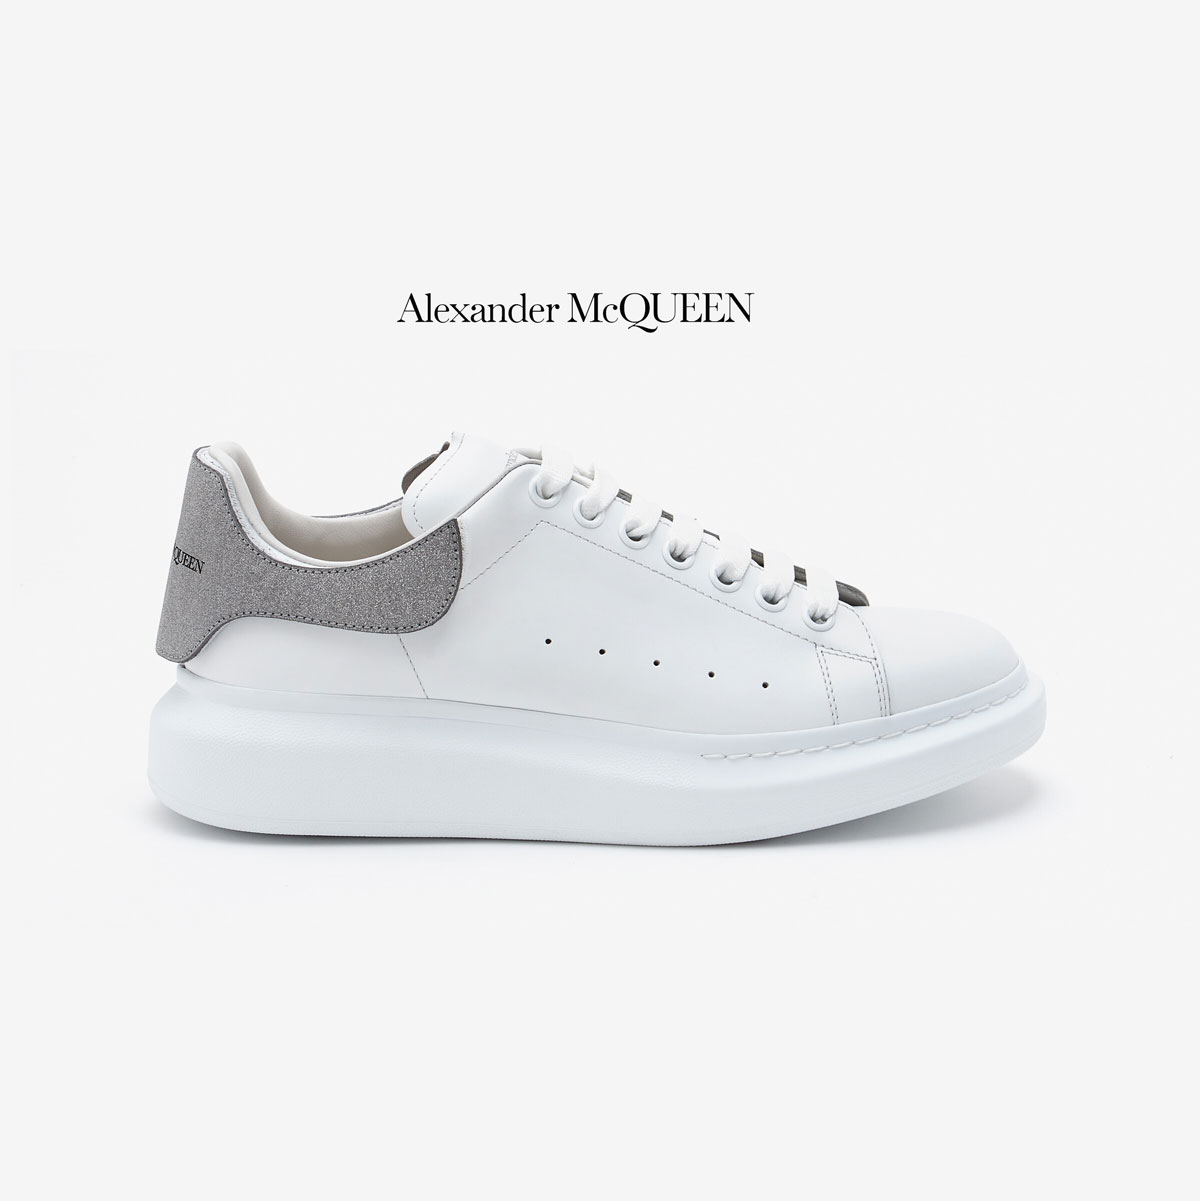 Alexander McQueen Sneaker Size Chart 